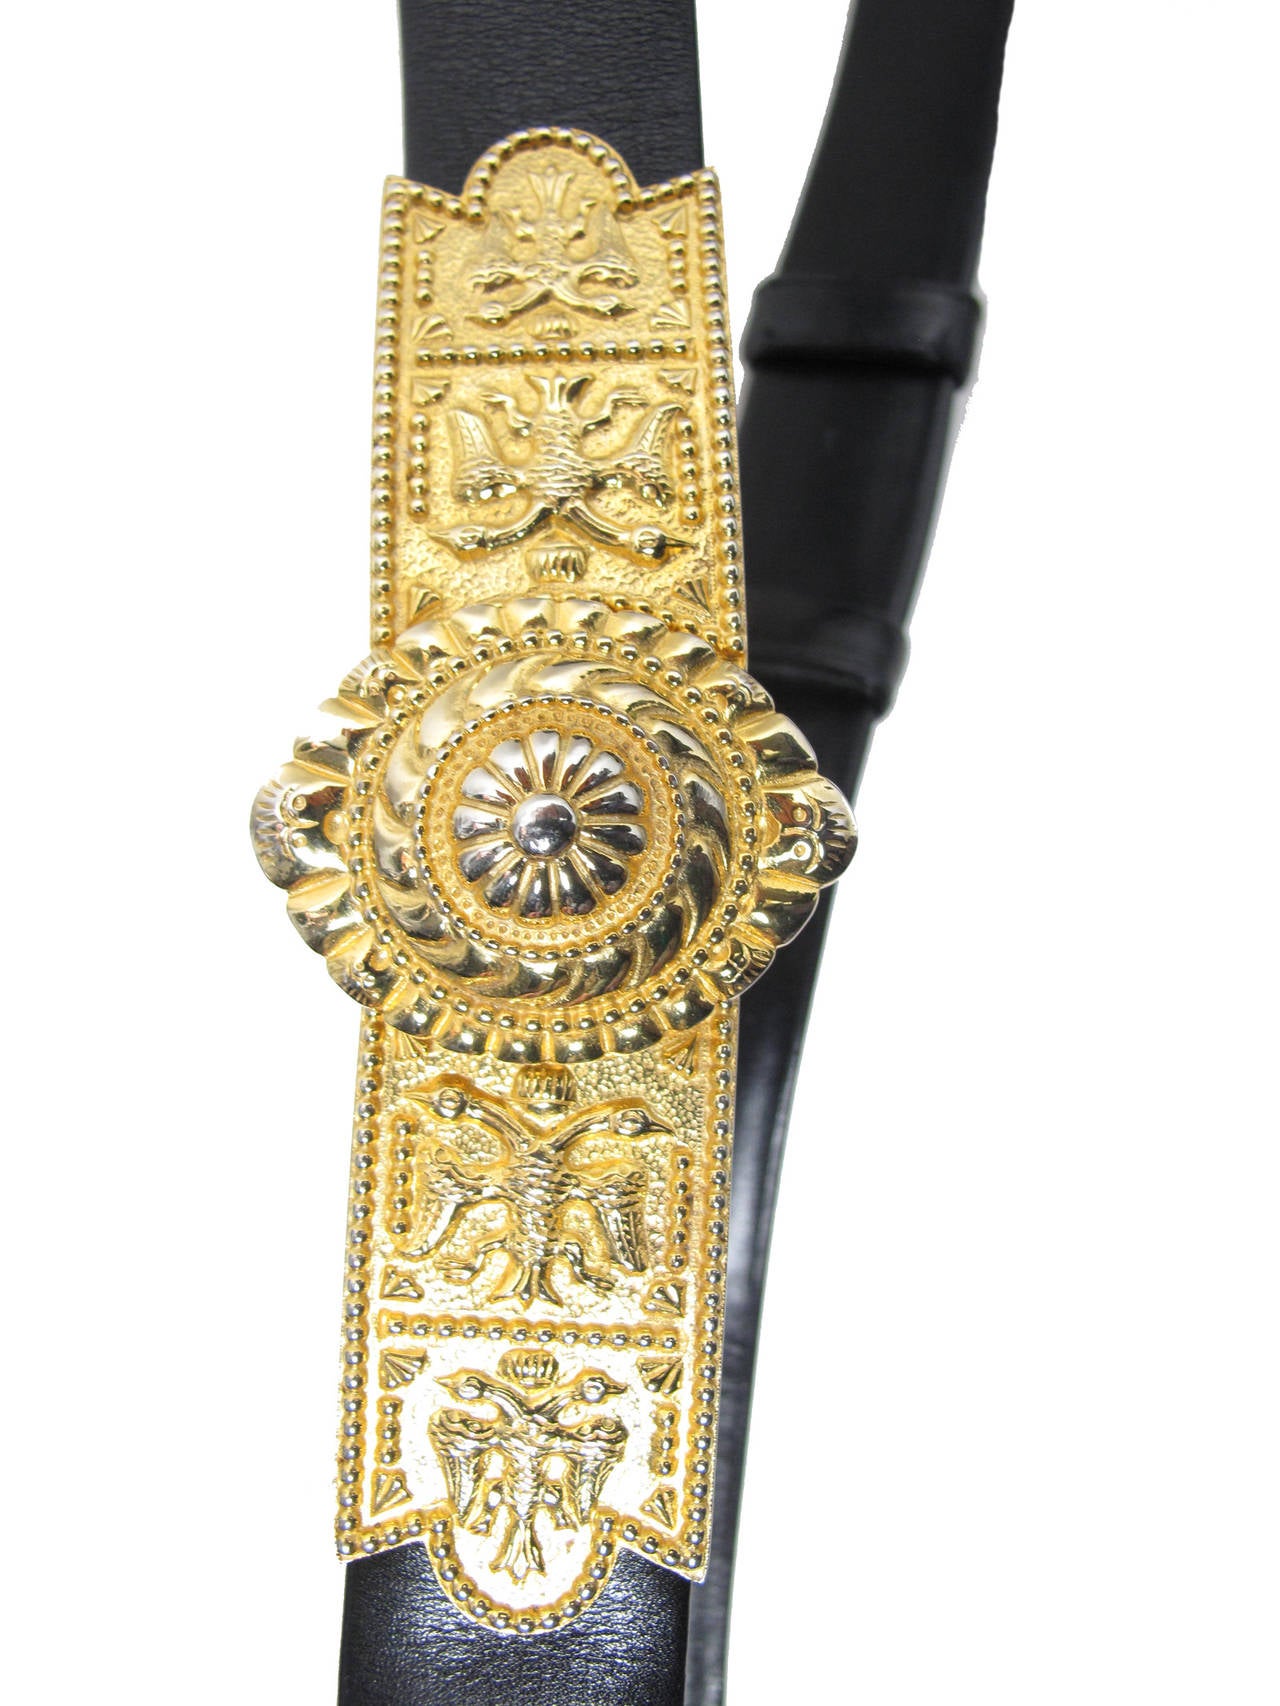 Judith Leiber black leather waist adjustable belt with gold buckle. 1